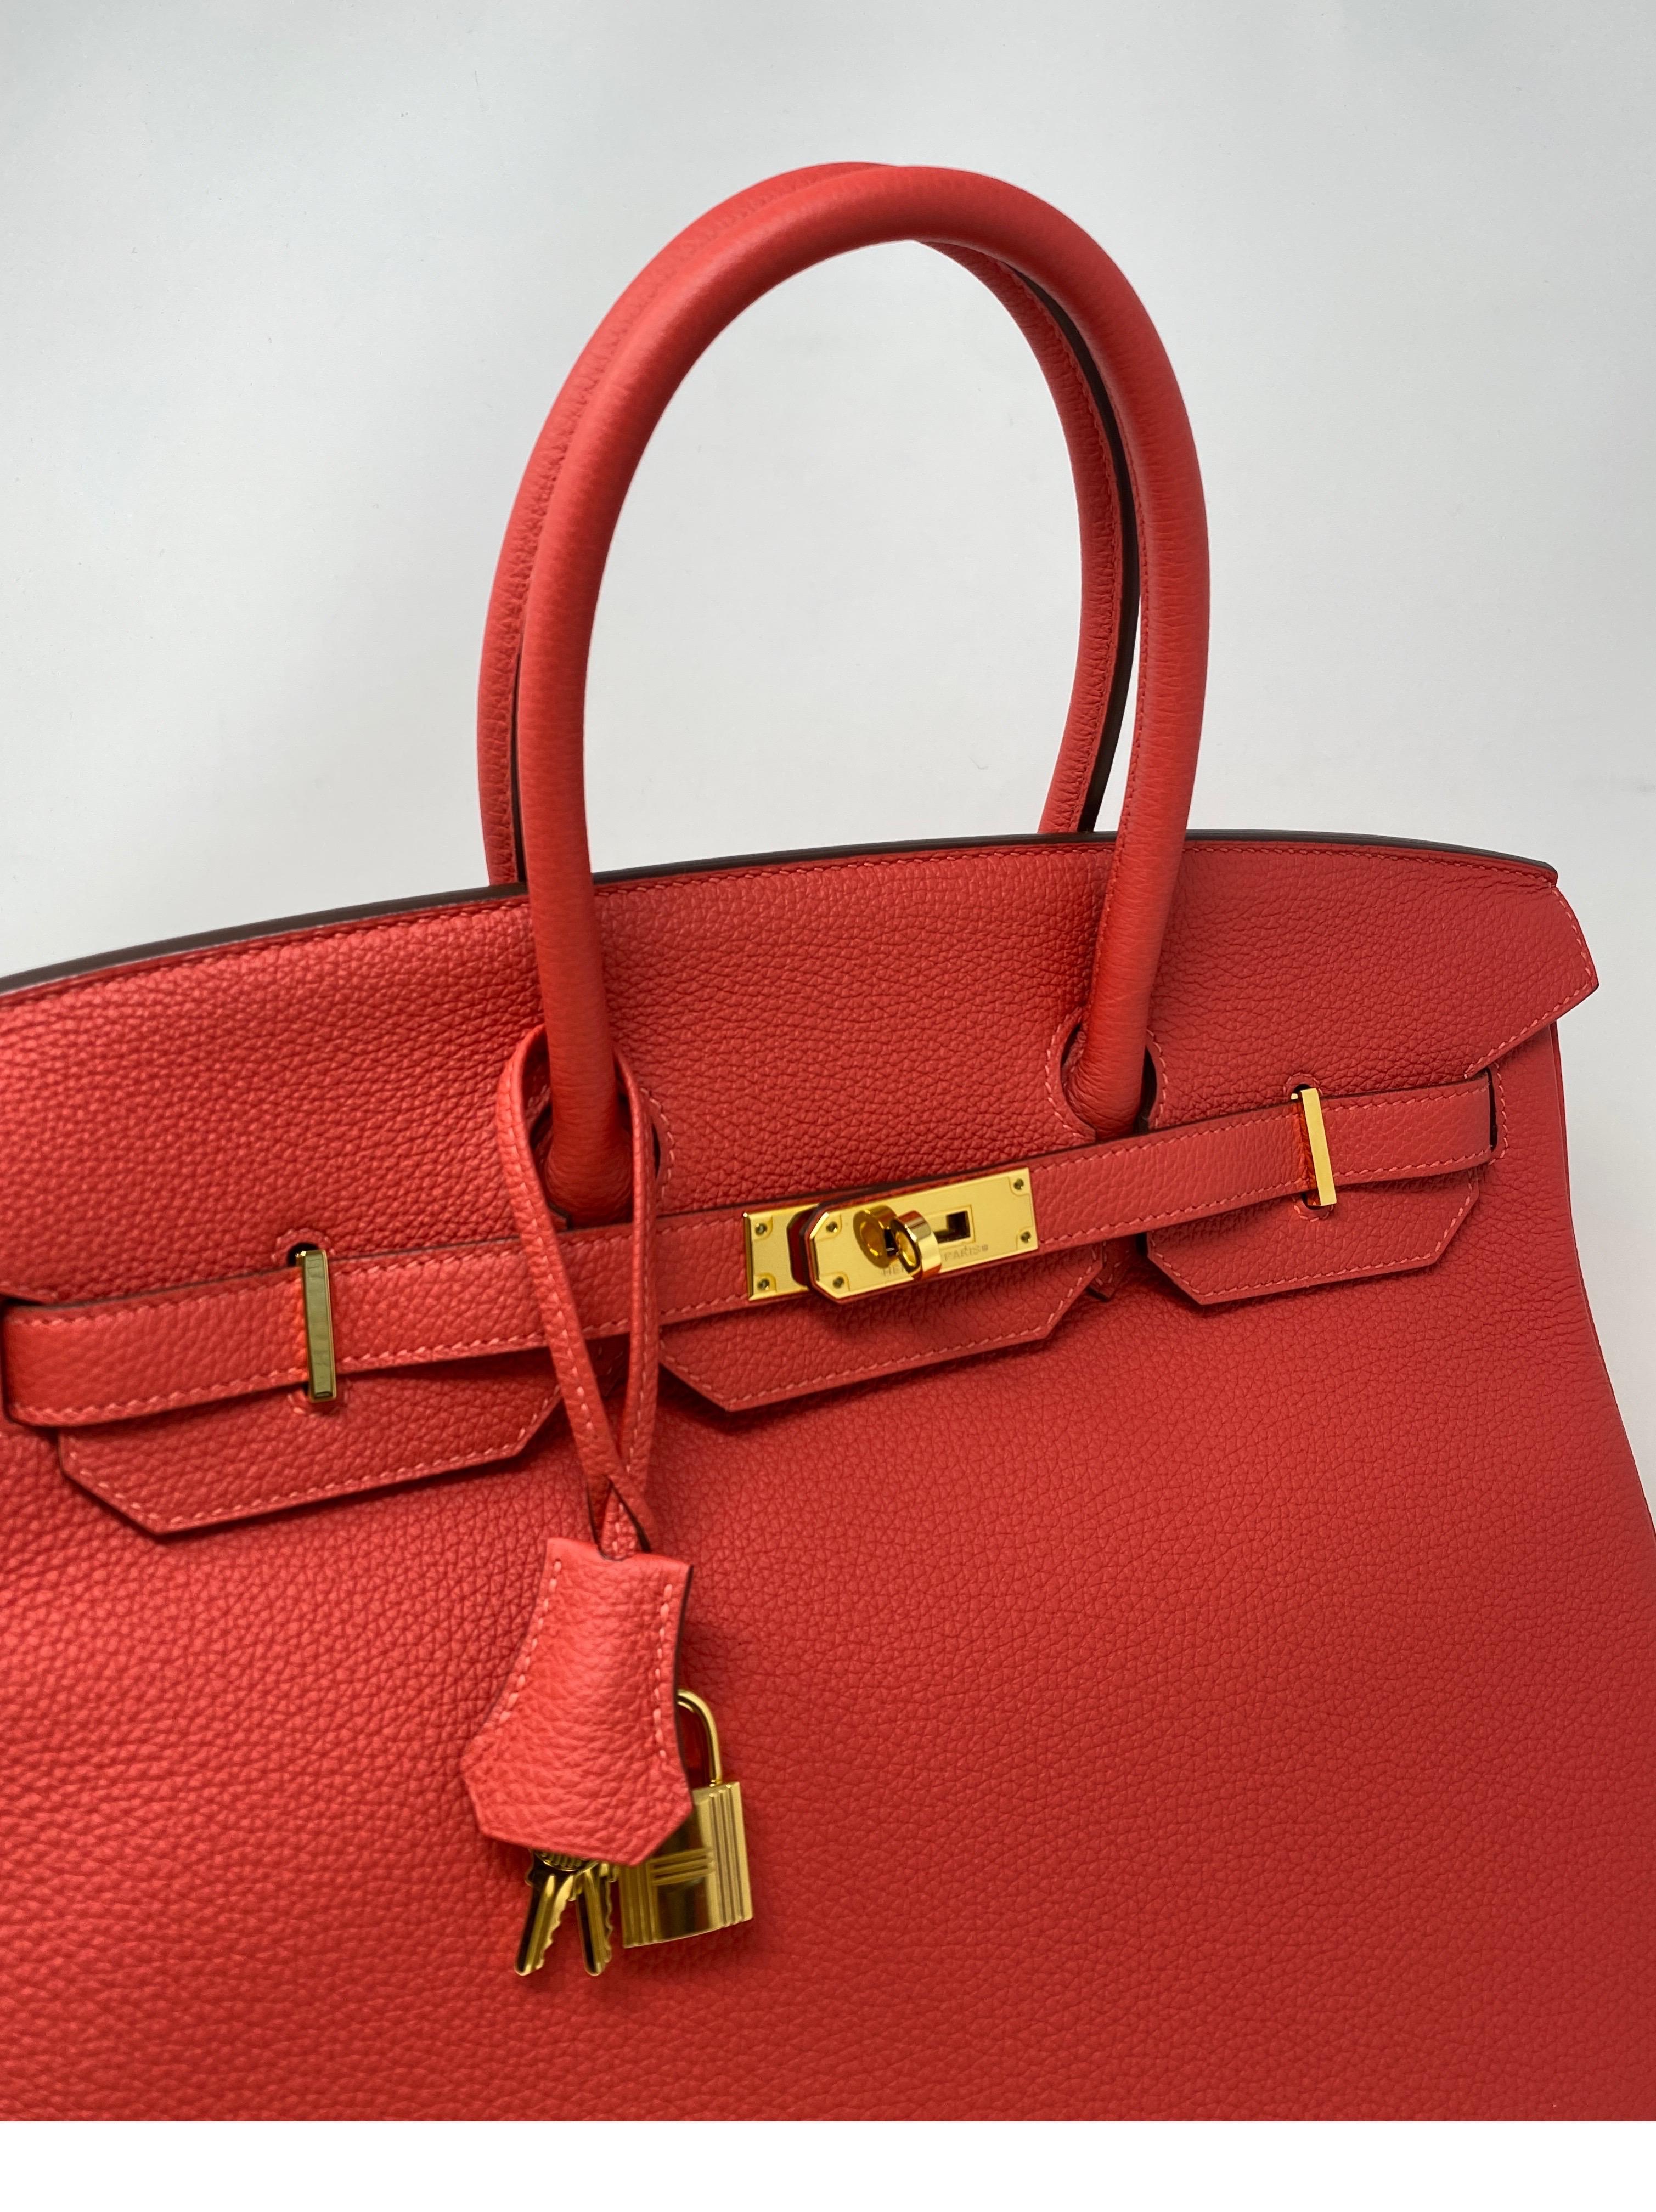 Red Hermes Rose Pivoine Birkin 35 Bag 